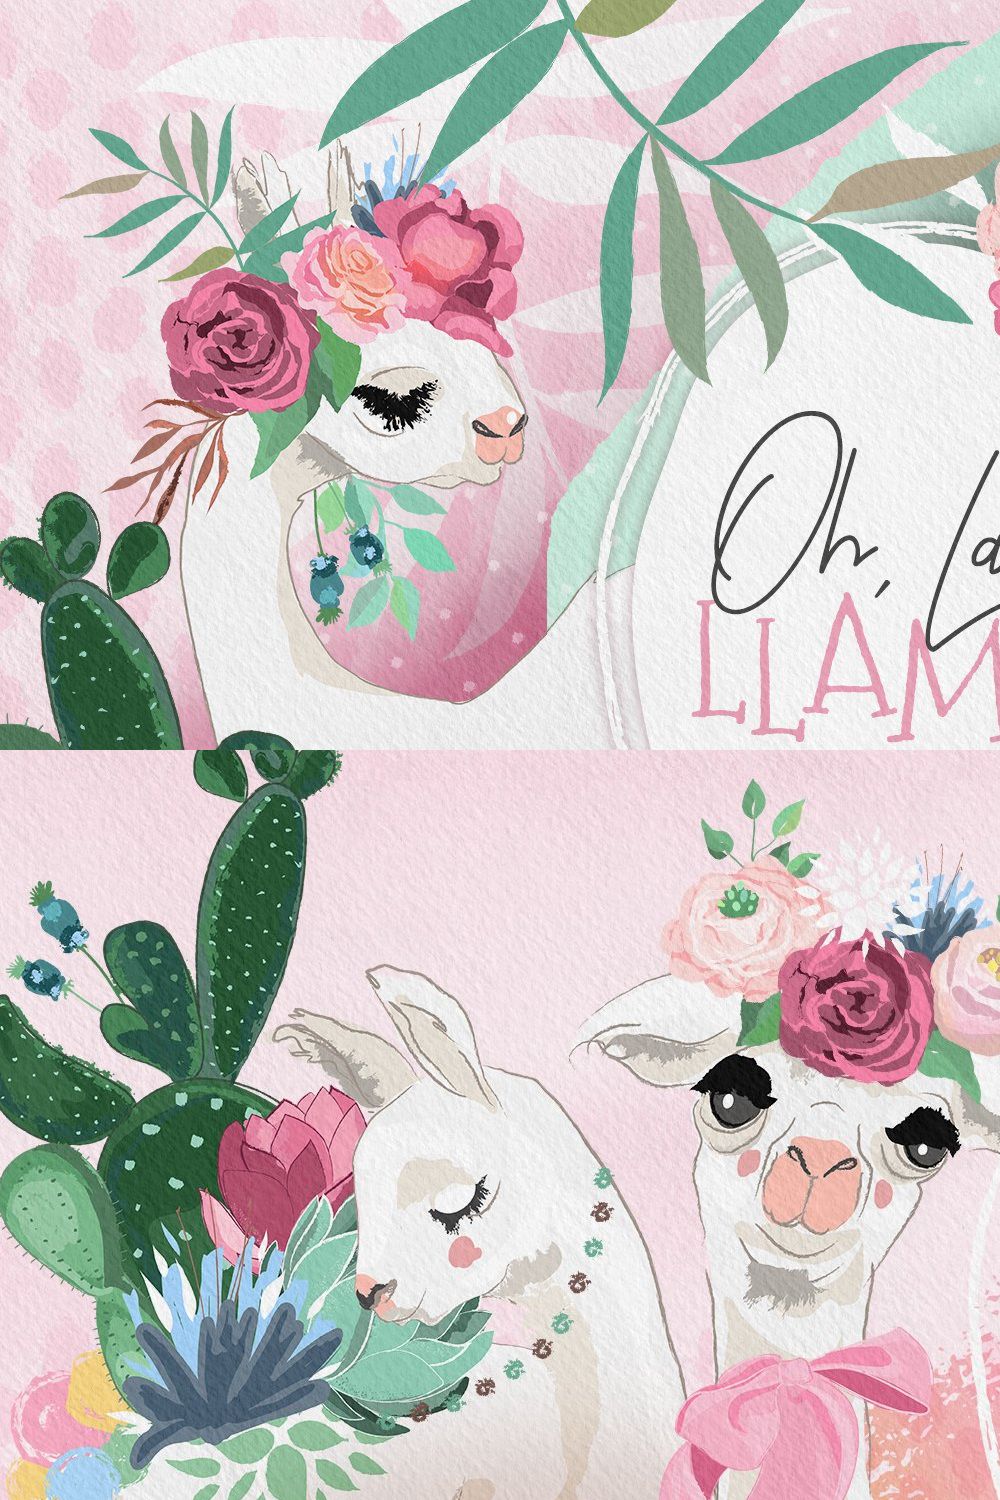 Oh La La Llama pinterest preview image.